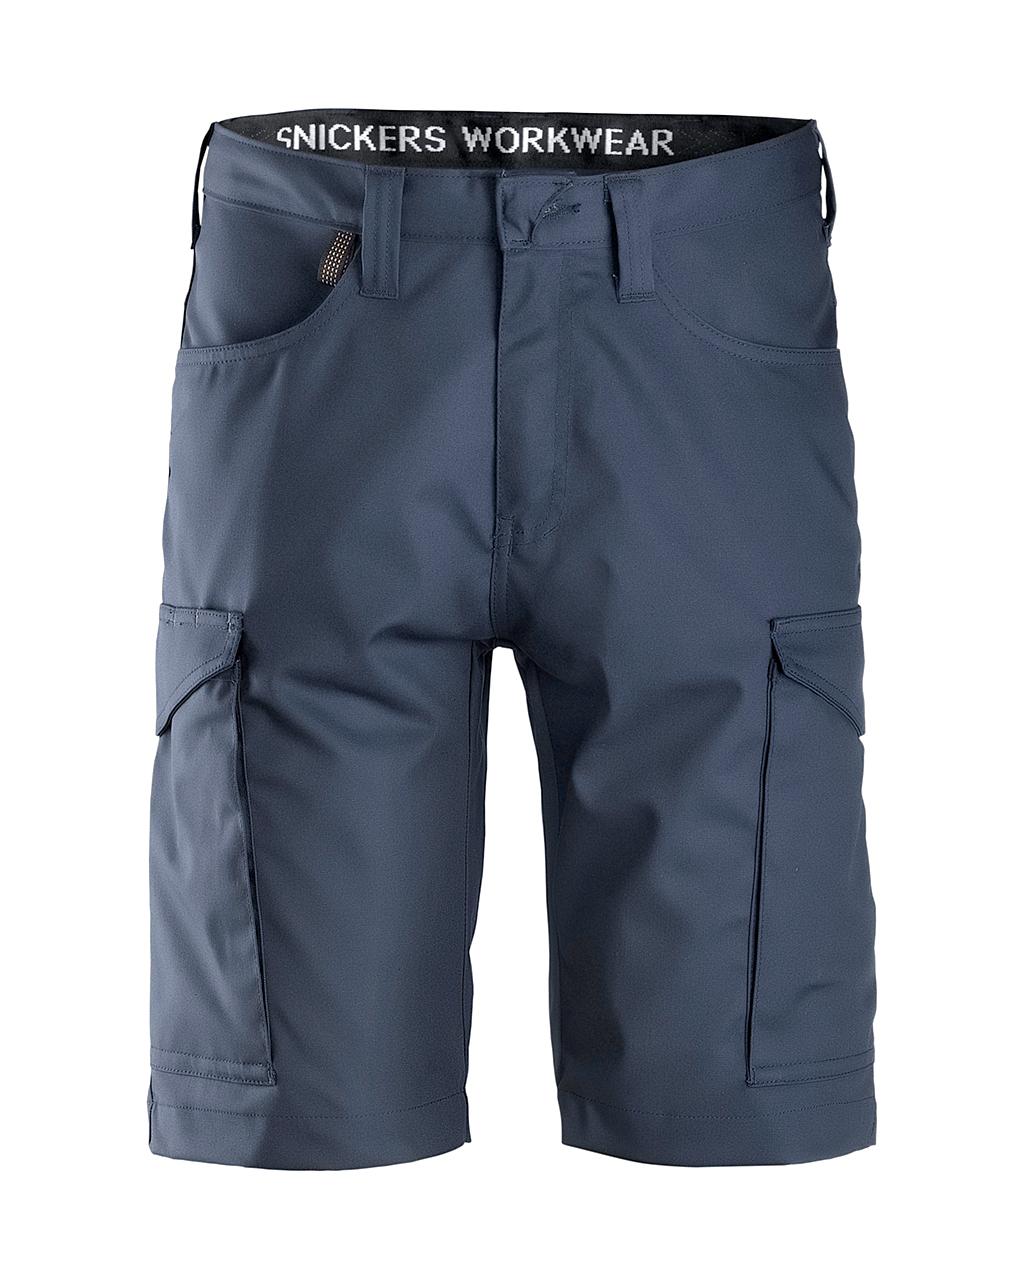 Bermuda shorts 6100 Service Snickers